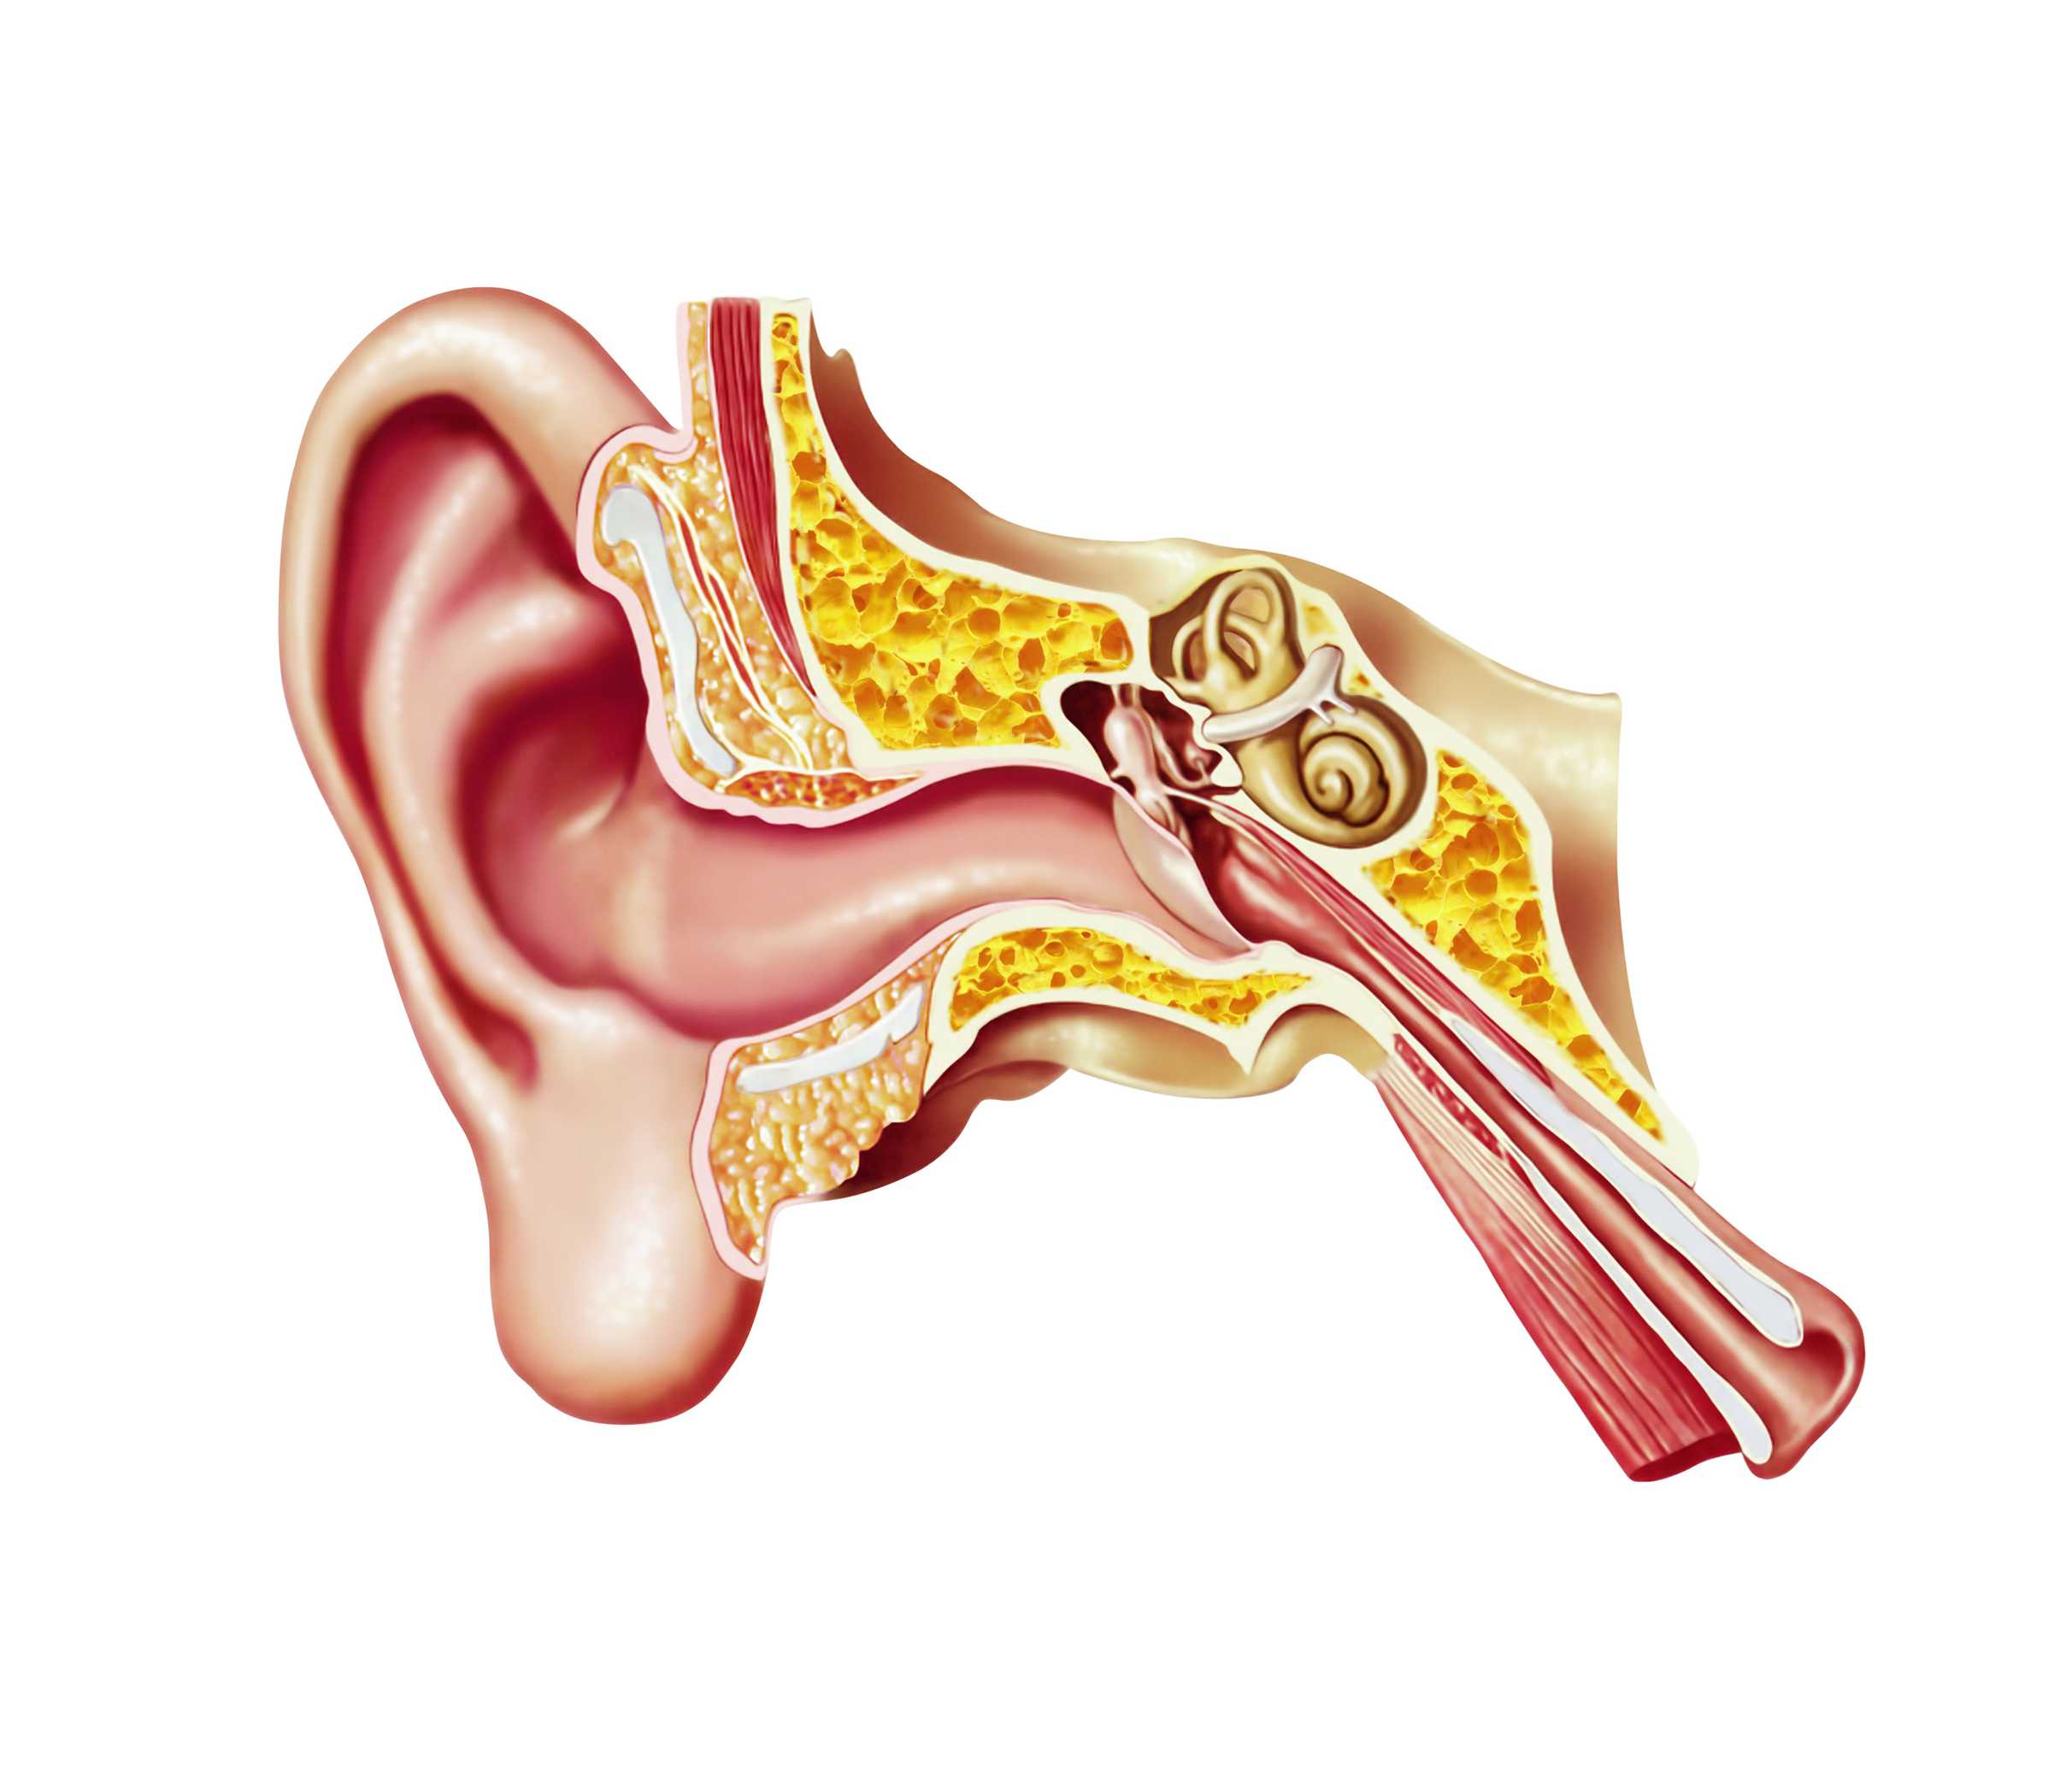 human-ear-anatomy--artwork-165564611-5ad381d1c5542e0036f5571f